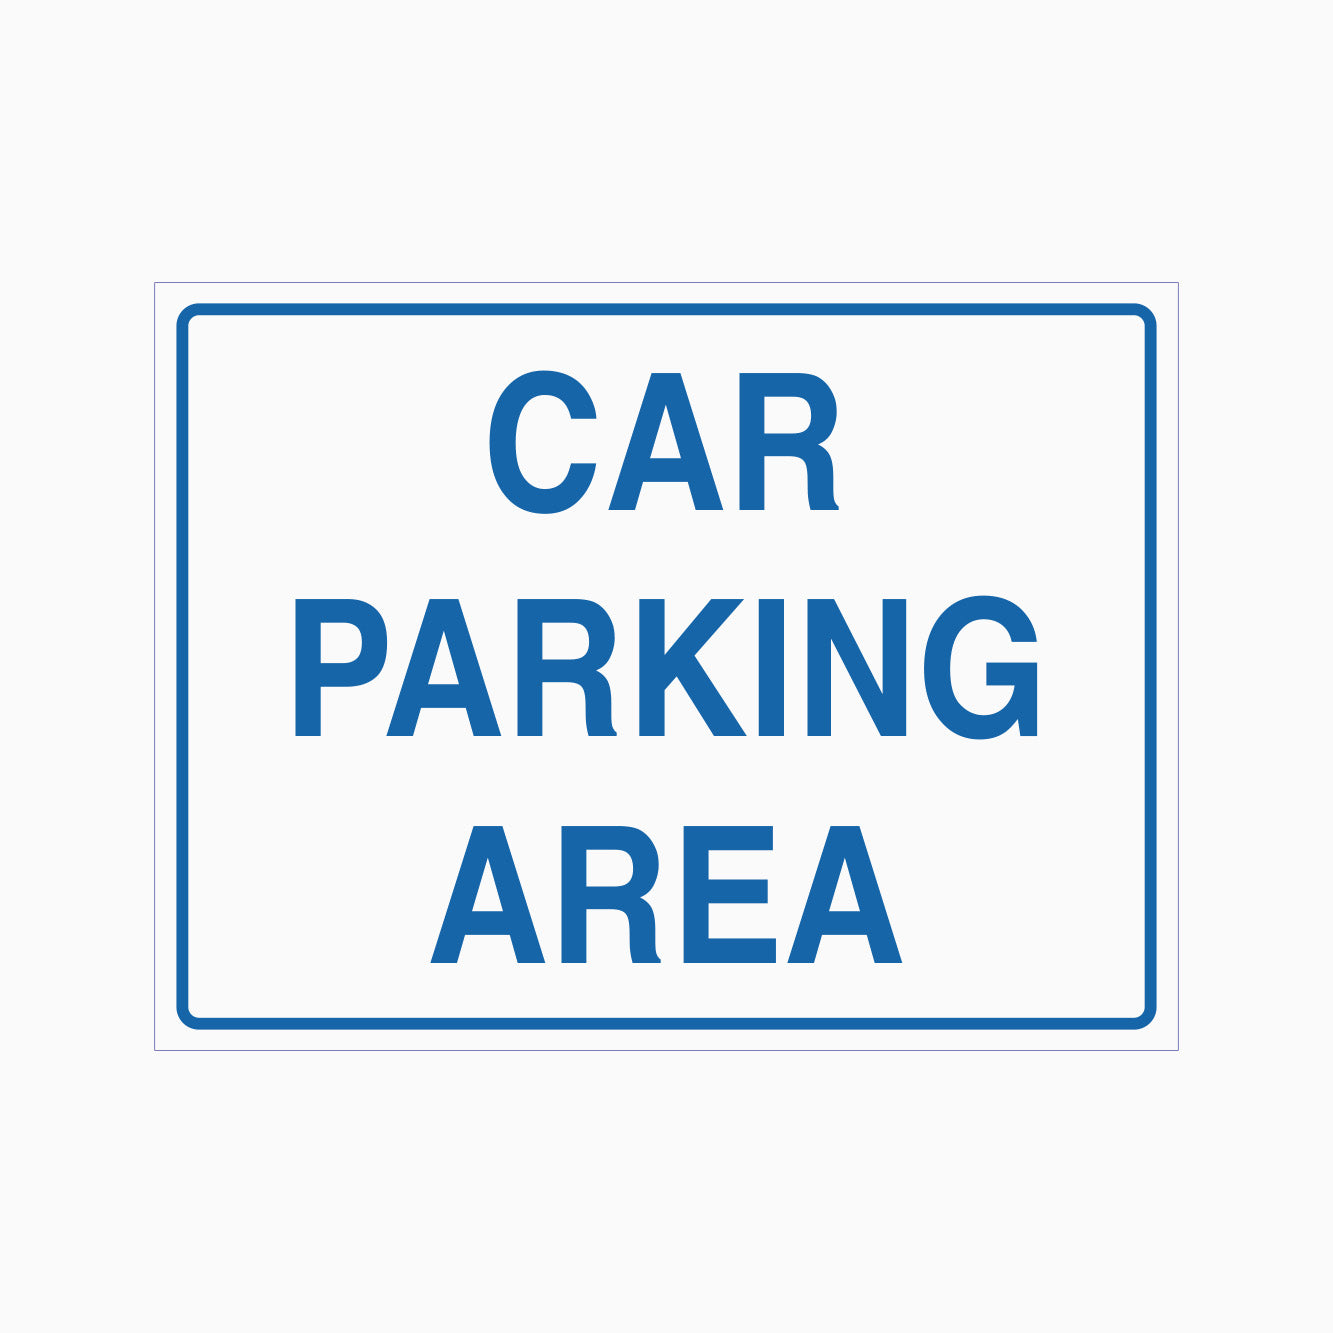 CAR PARKING AREA SIGN - GET SIGNS